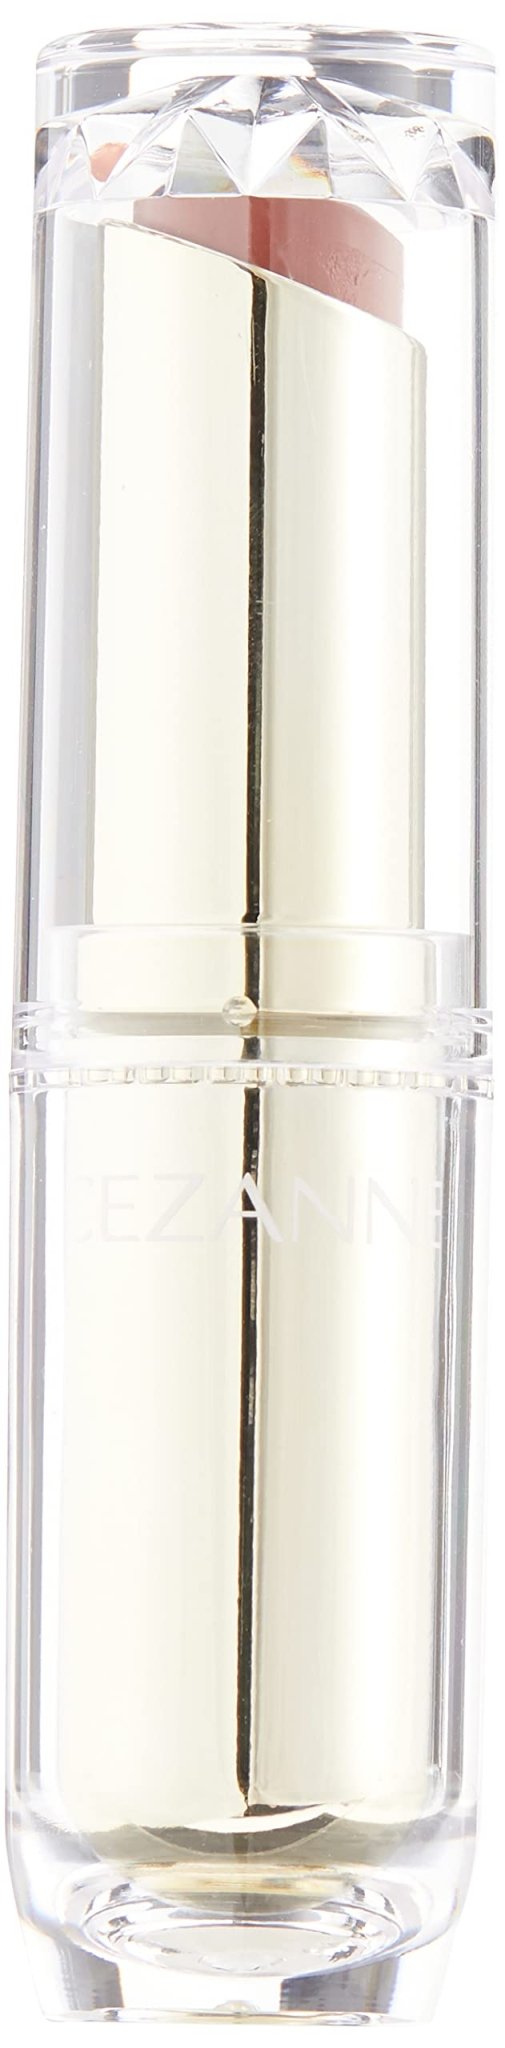 Cezanne Lasting Gloss Lip 101 Brown 3.2G Lipstick for Long - Lasting Wear